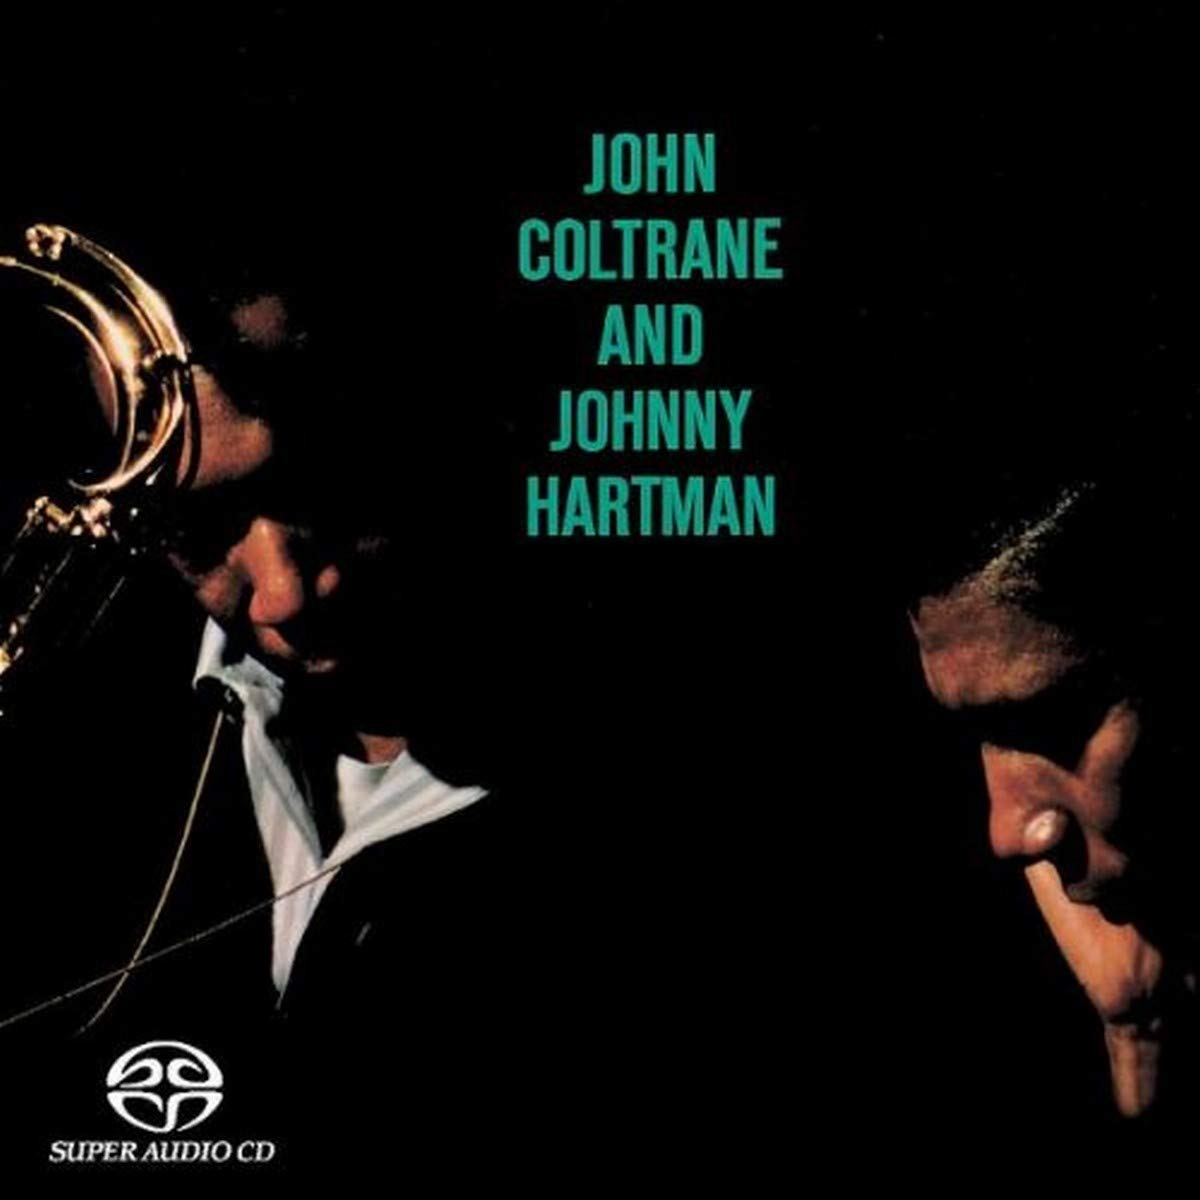 John Coltrane & Johnny Hartman John Coltrane and Johnny Hartman cover artwork